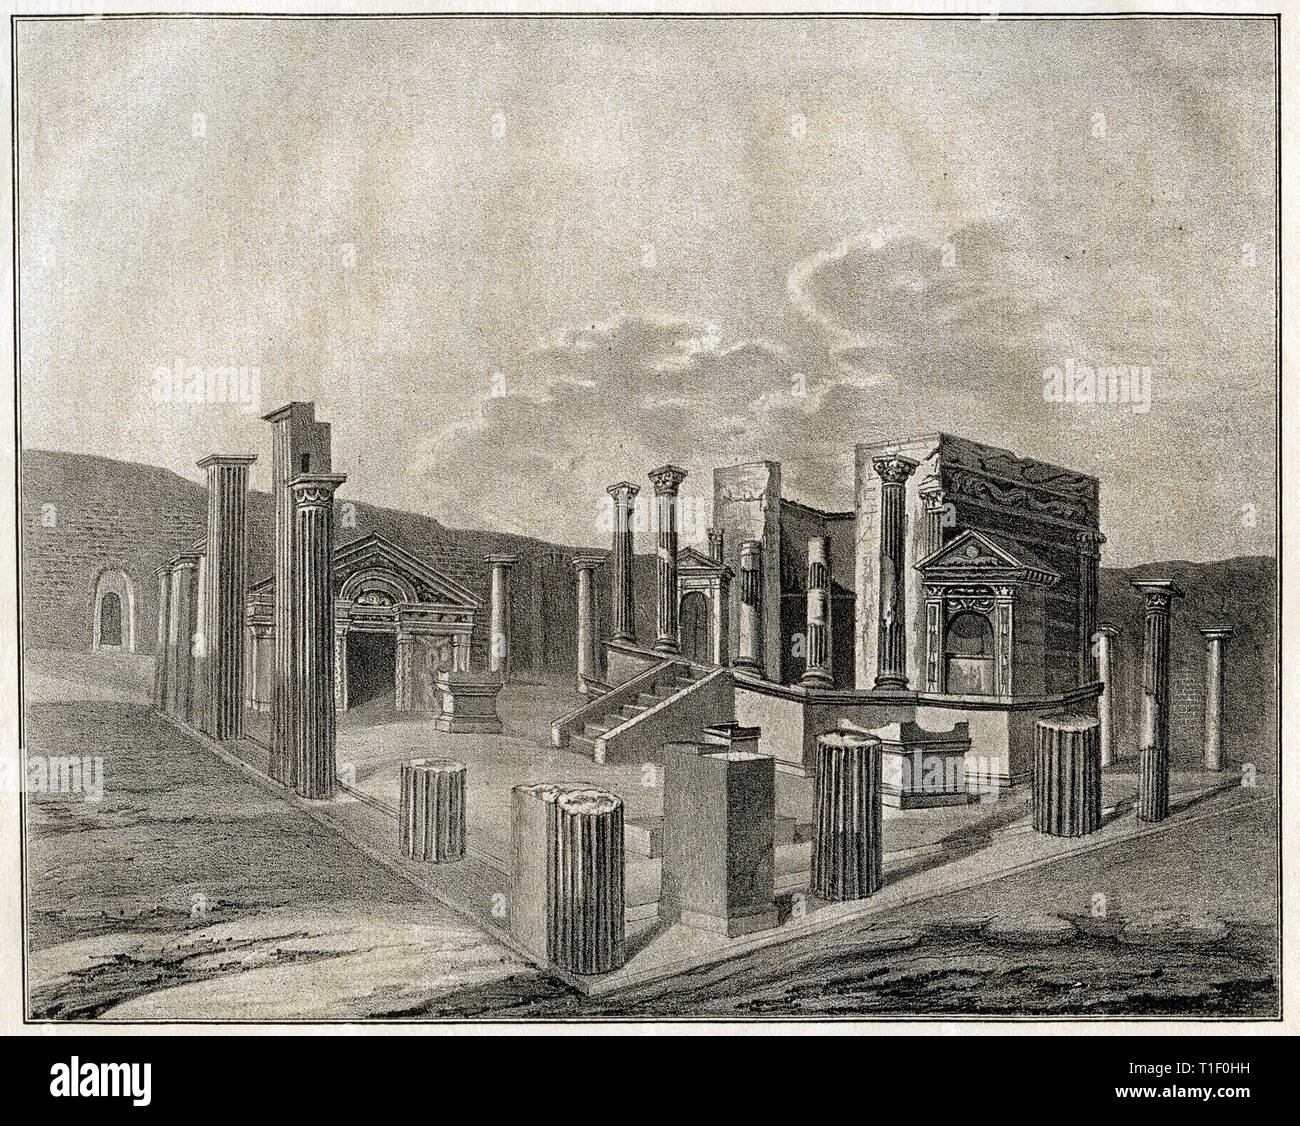 Italien, Pompeji, der Tempel der Isis, im 2. Jahrhundert v. Chr., Lithographie um 1840, aus einem Buch., Additional-Rights - Clearance-Info - Not-Available Stockfoto